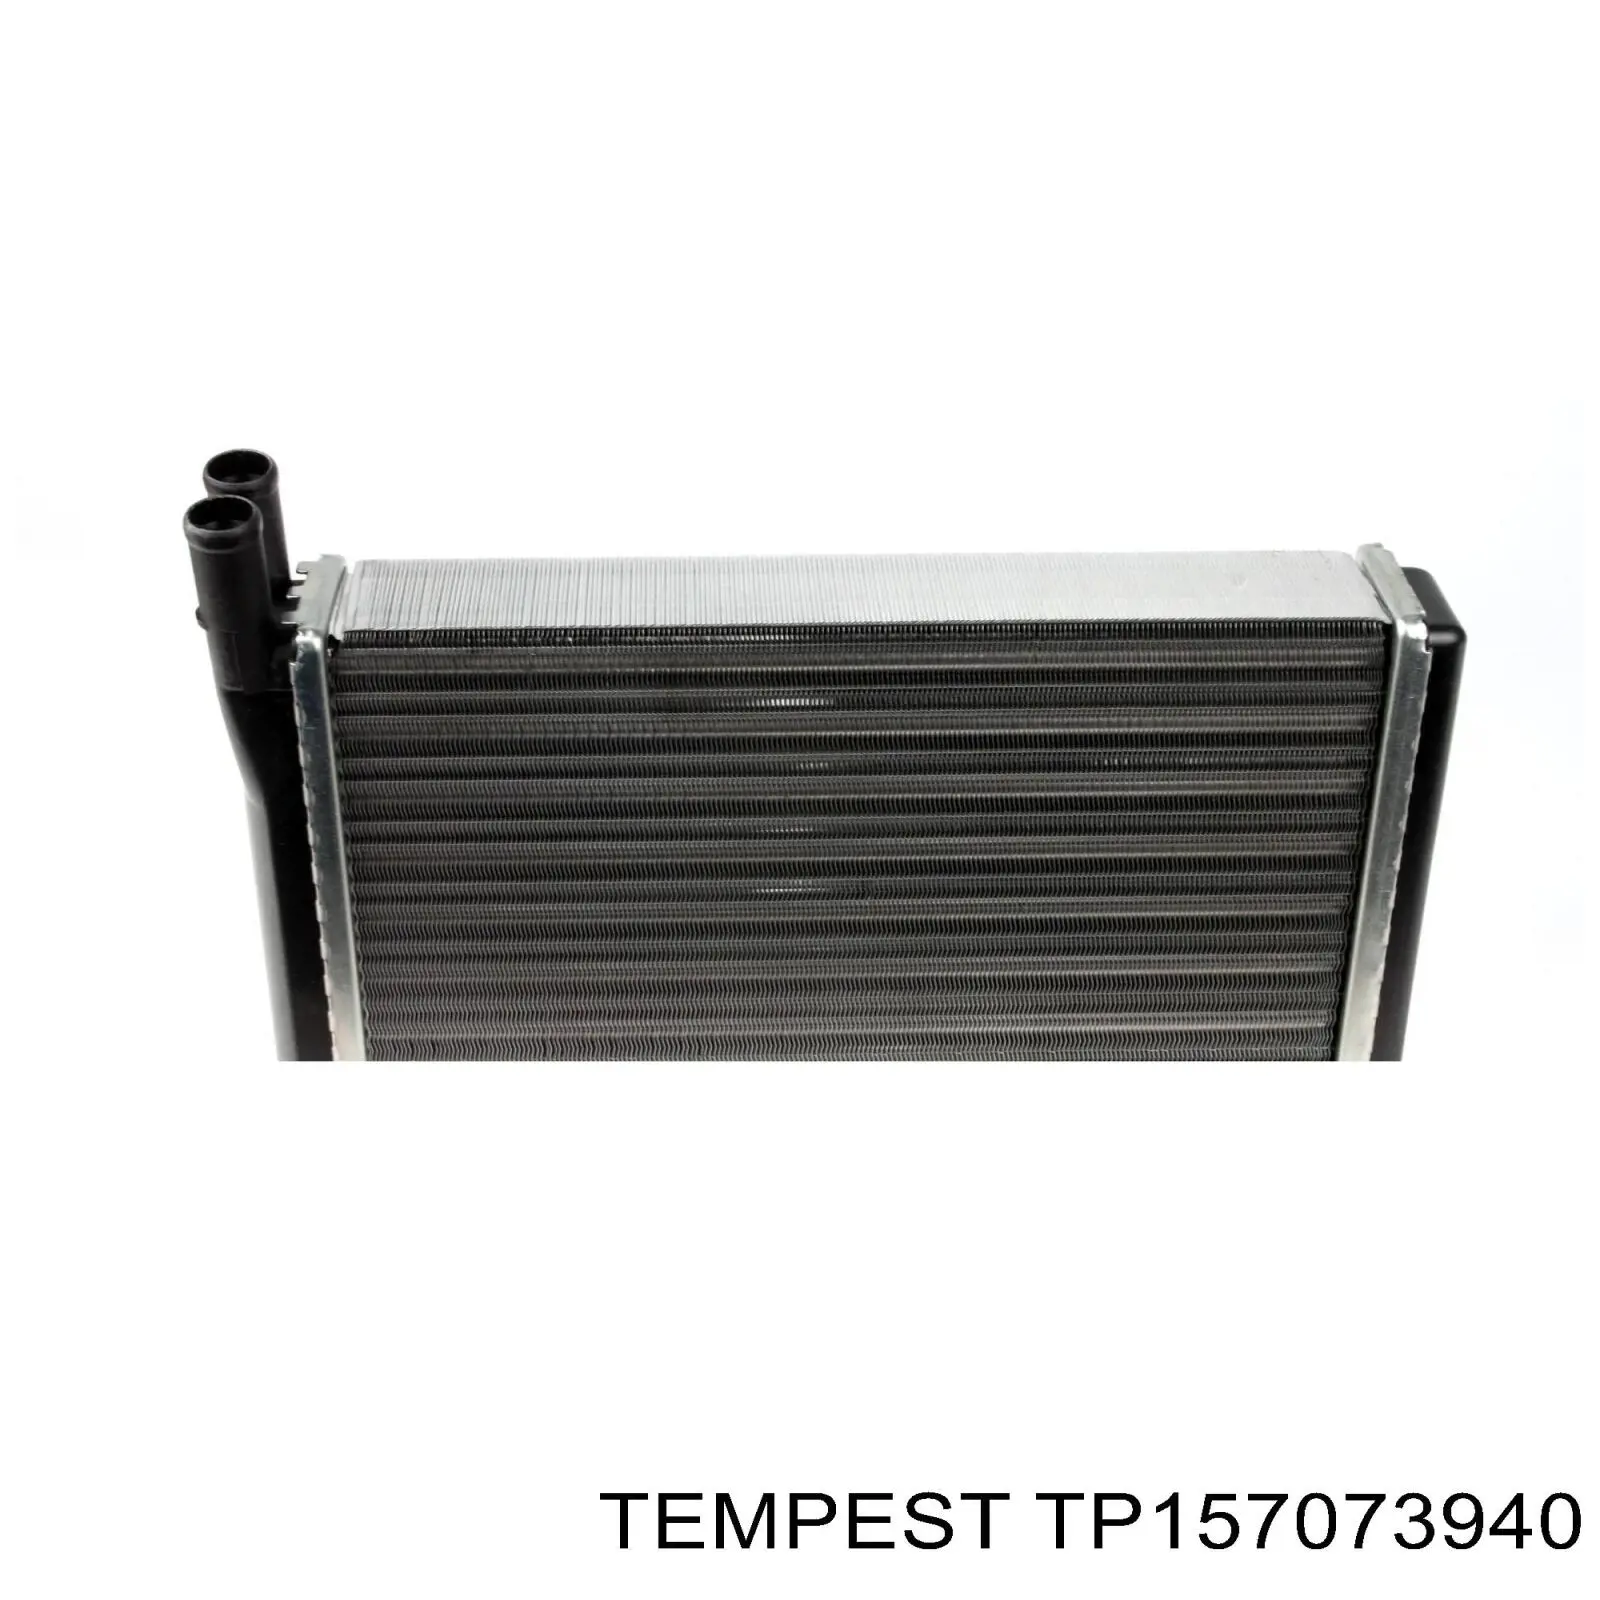 TP157073940 Tempest radiador de calefacción